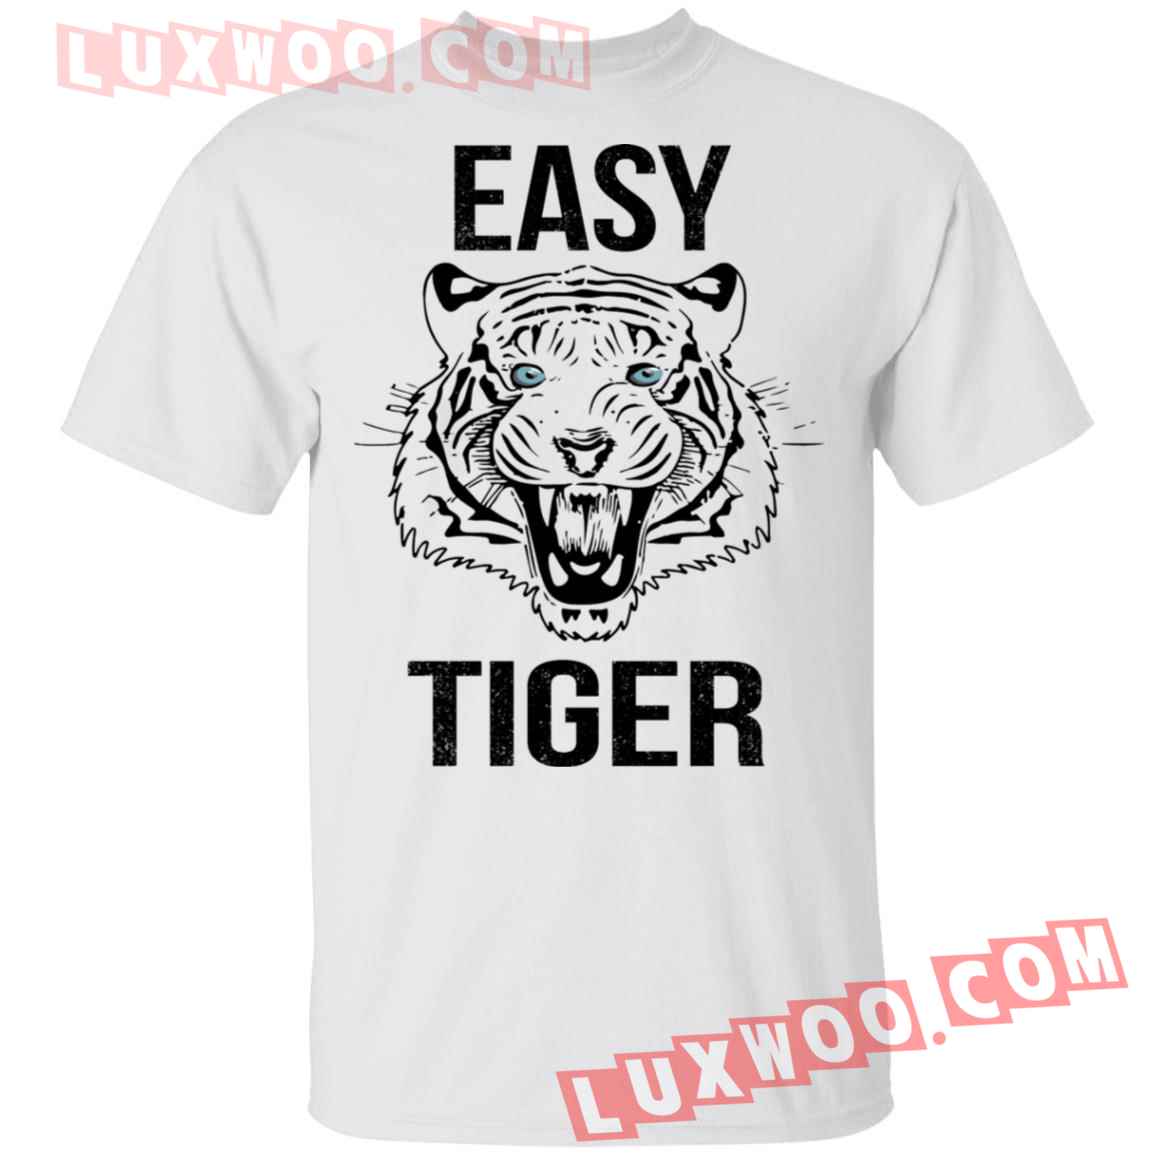 Easy Tiger Shirt - Luxwoo.com